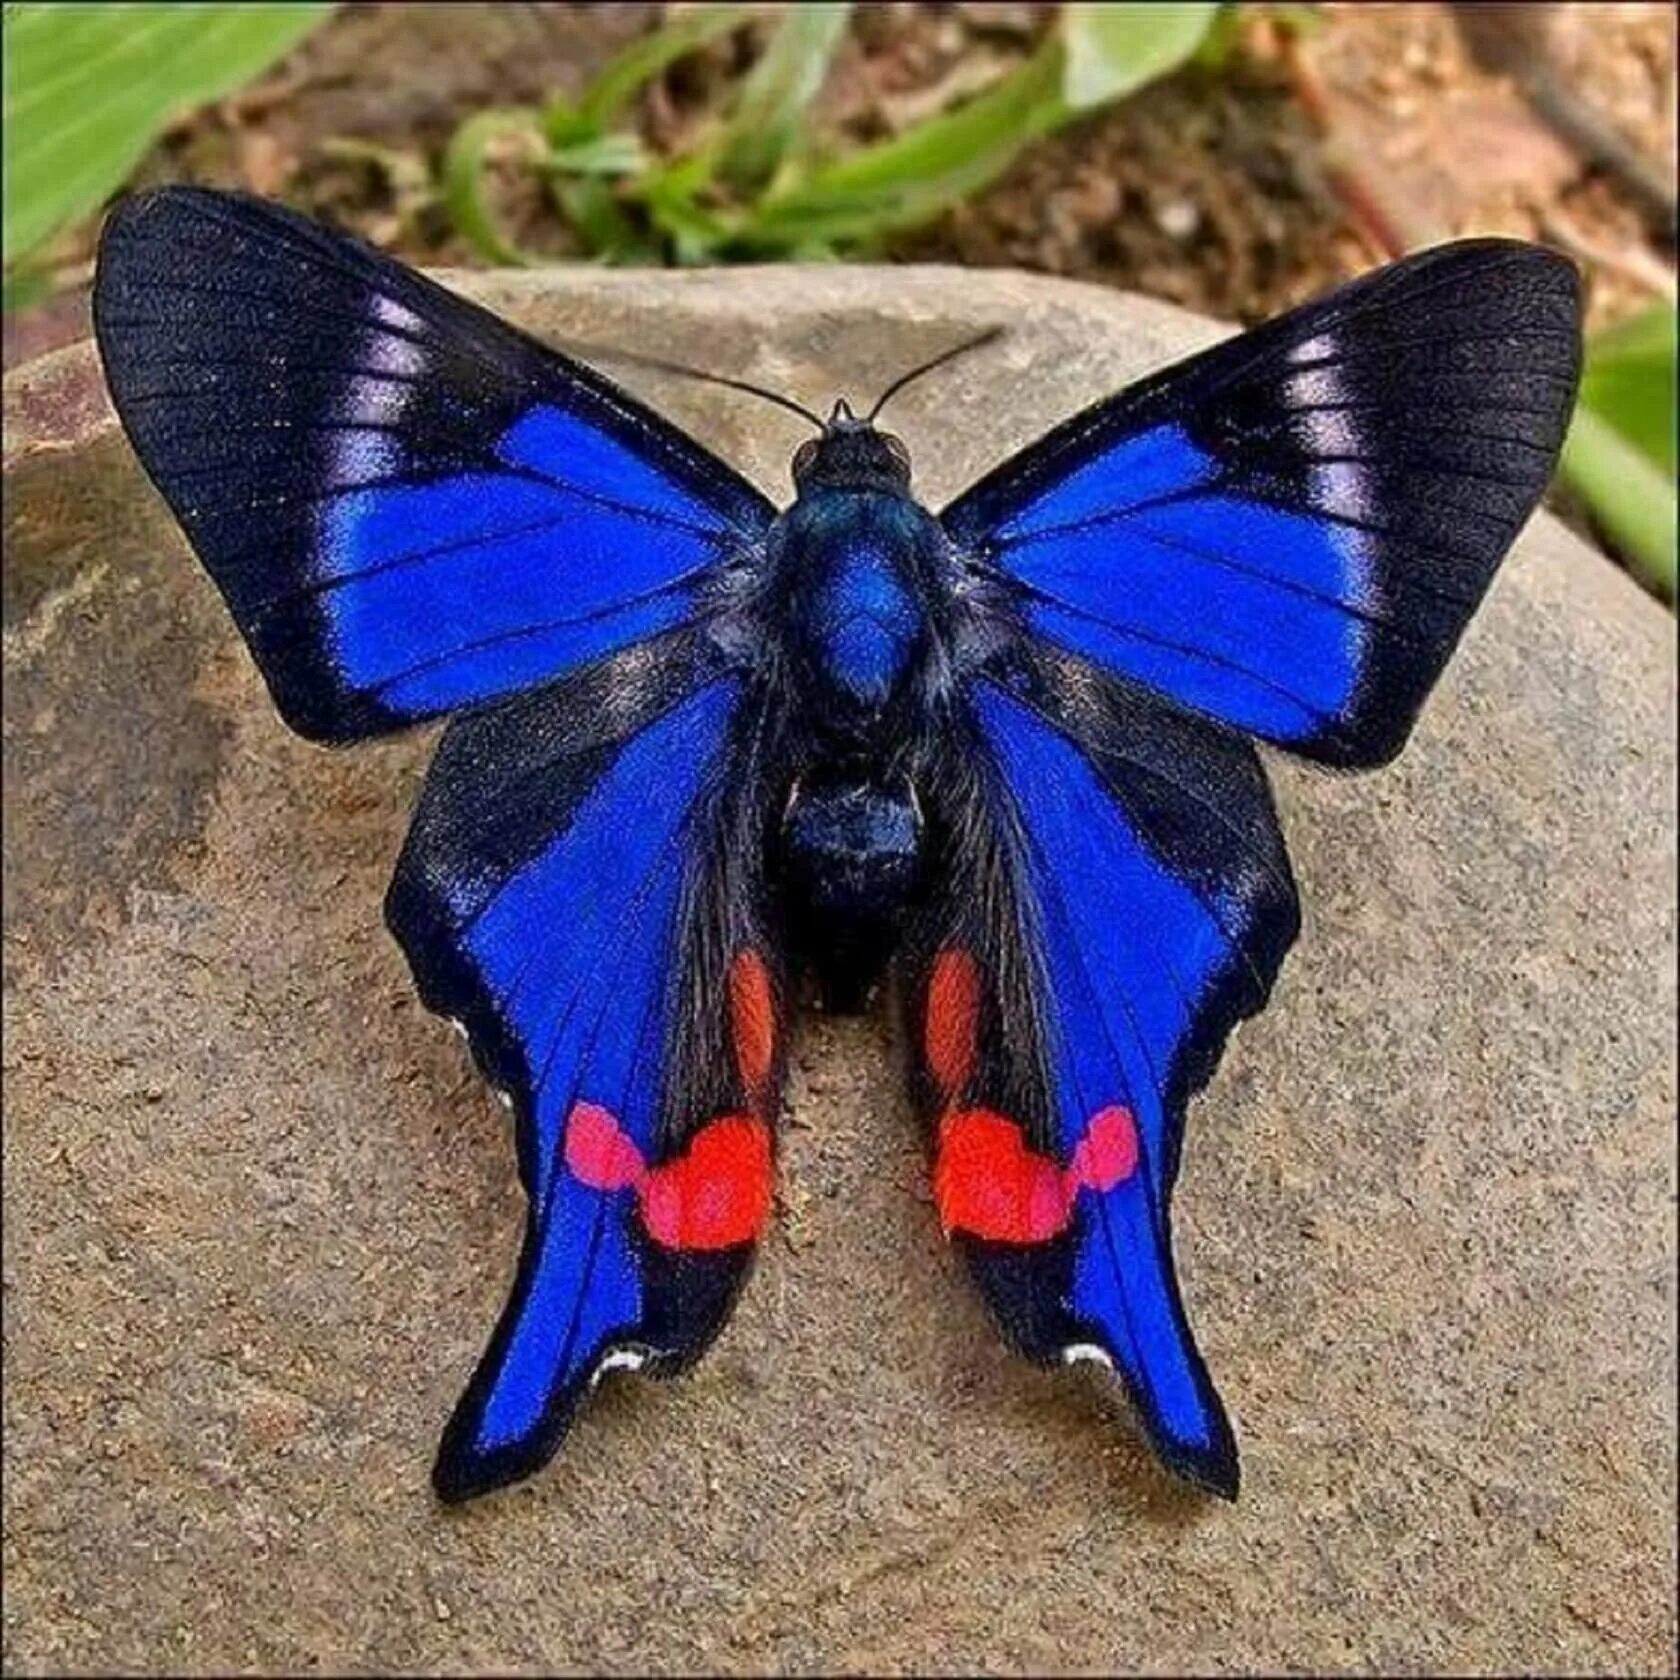 Название самых красивых бабочек. Бабочка Rhetus Periander. Калифорнийский синий Махаон. Черный Кардинал бабочка. Бабочка Урания Мадагаскарская.